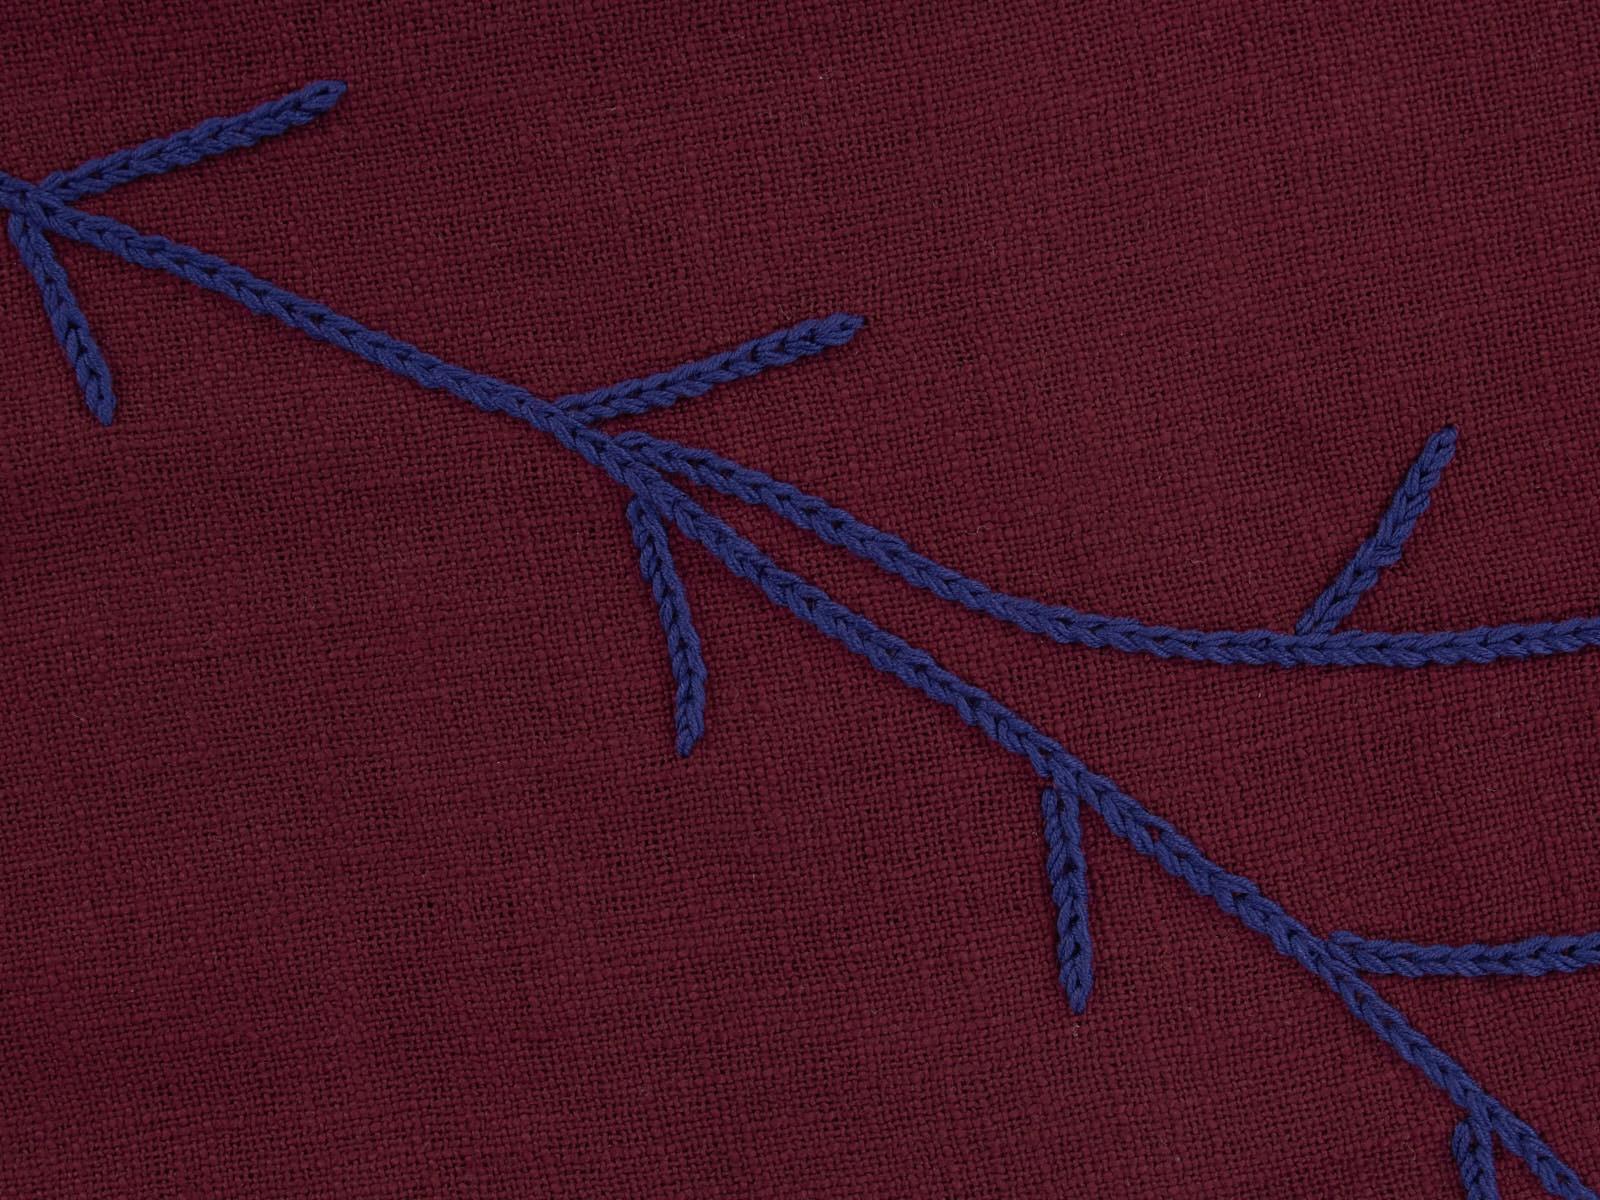 Needlework Trim, Hand Embroidered Burgundy Throw Blanket For Sale